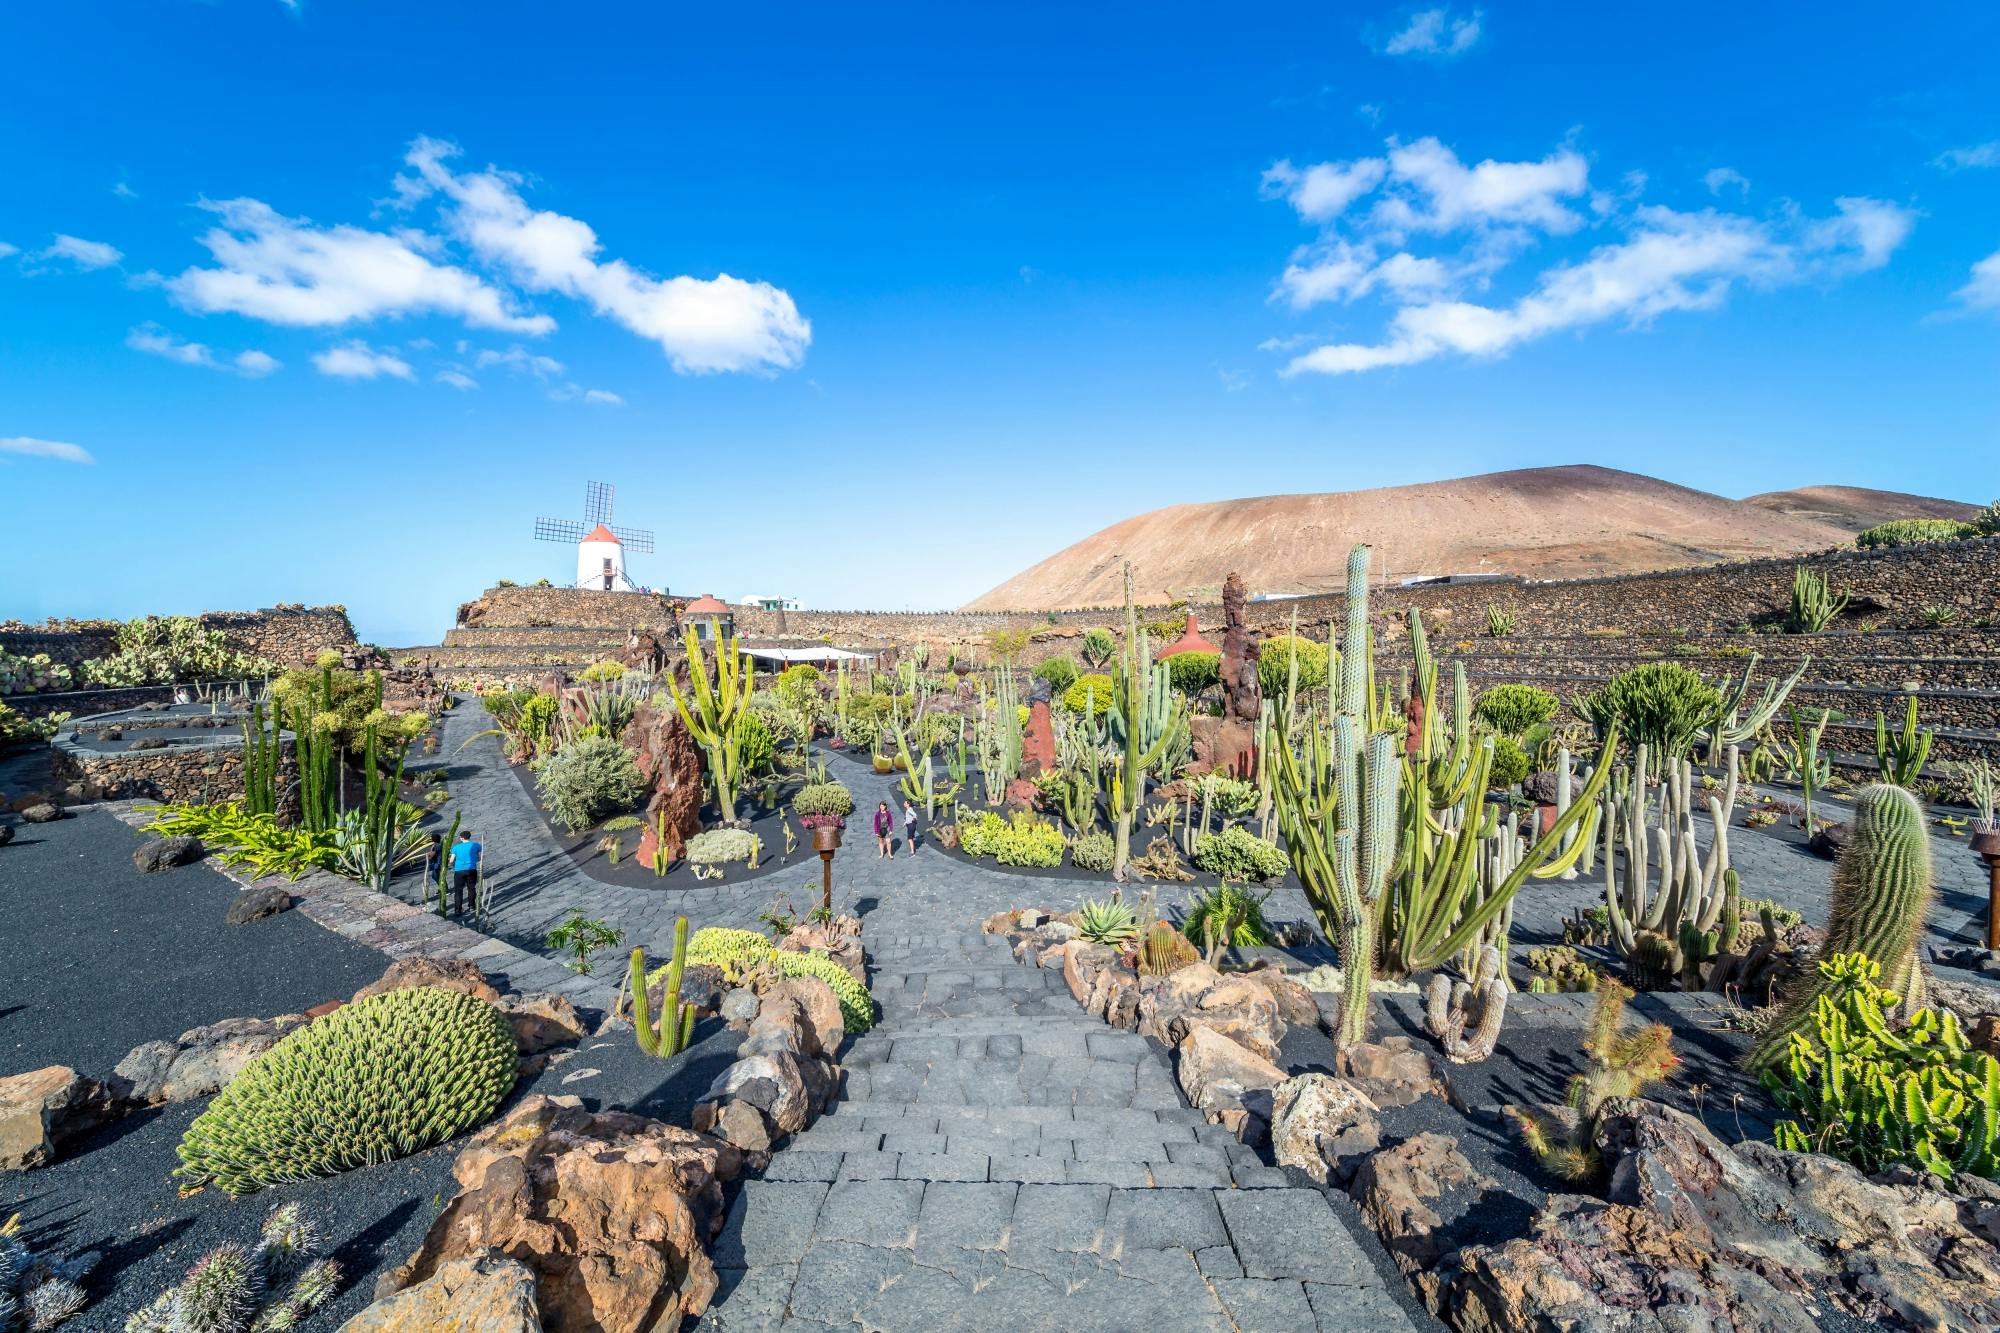 Jardin de Cactus (Lanzarote): photos + conseils